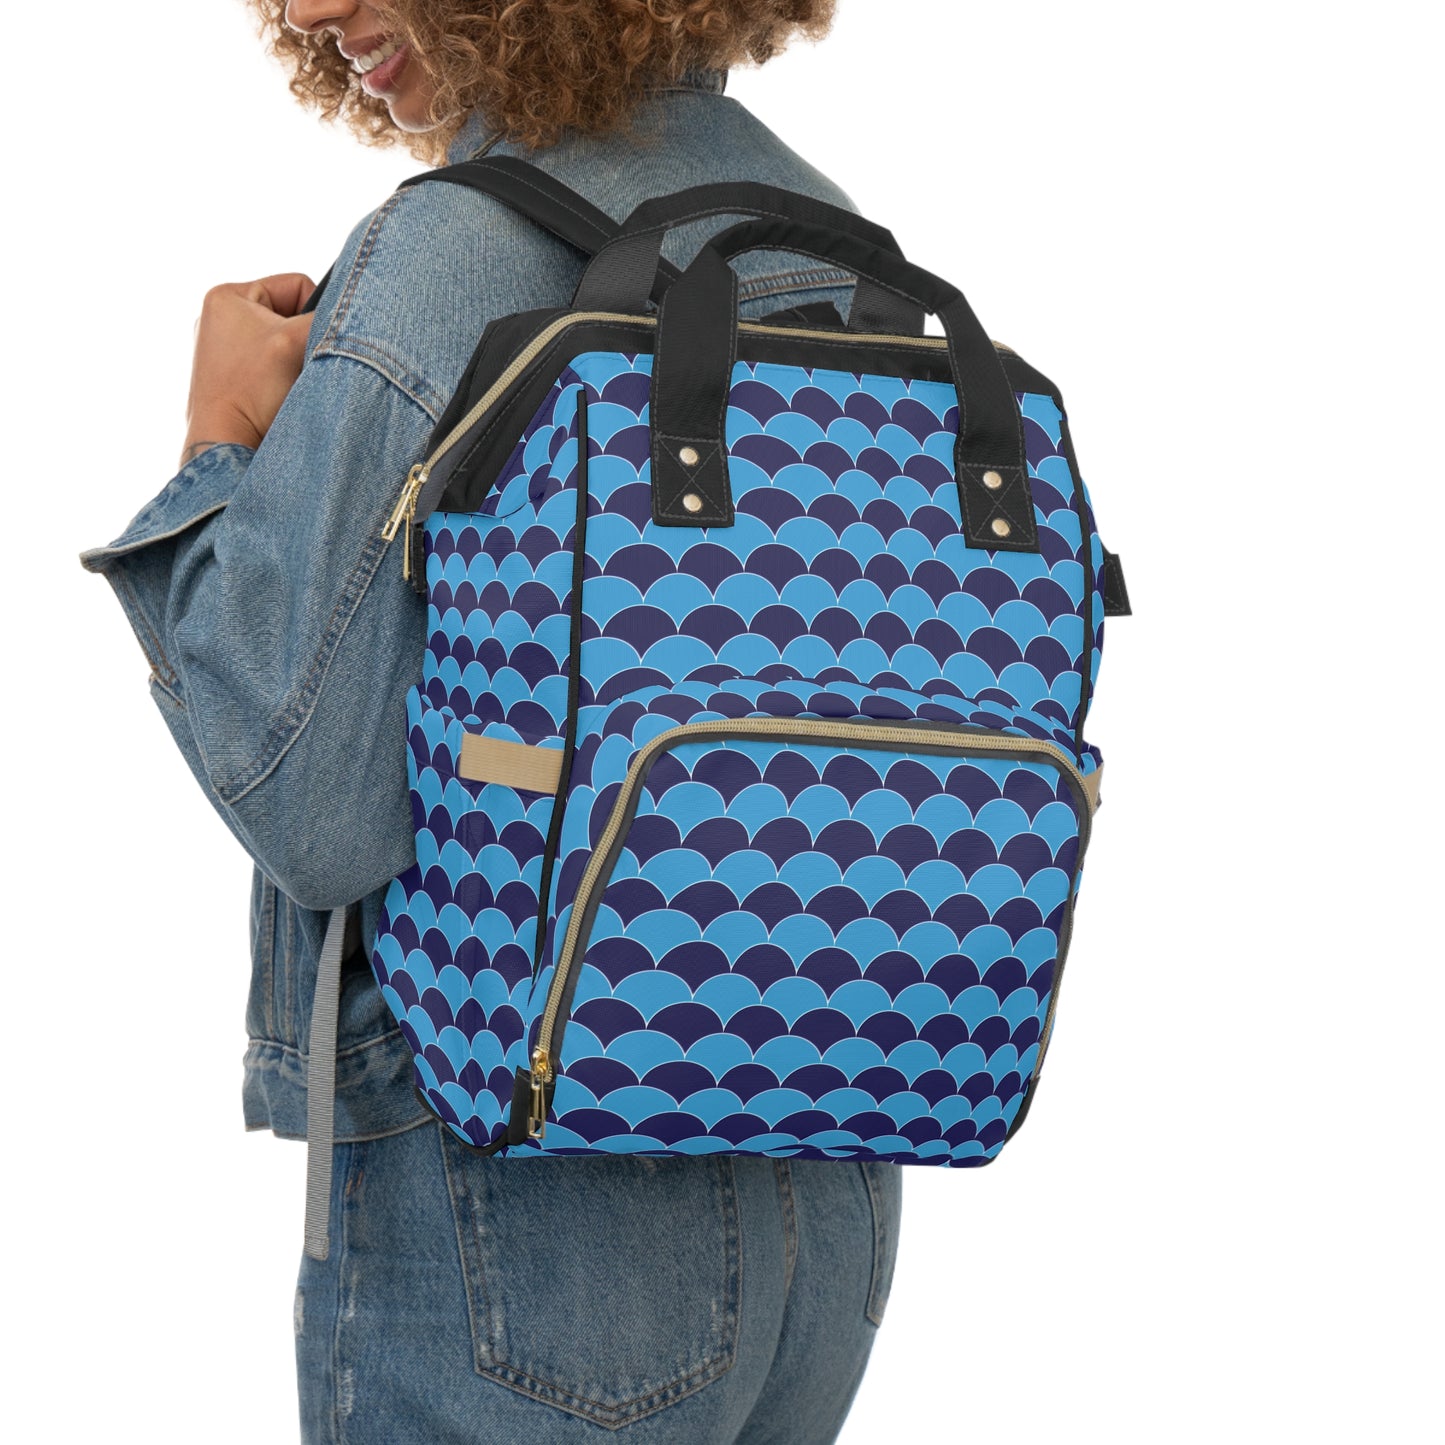 Blue fans  - Multifunctional Diaper Backpack